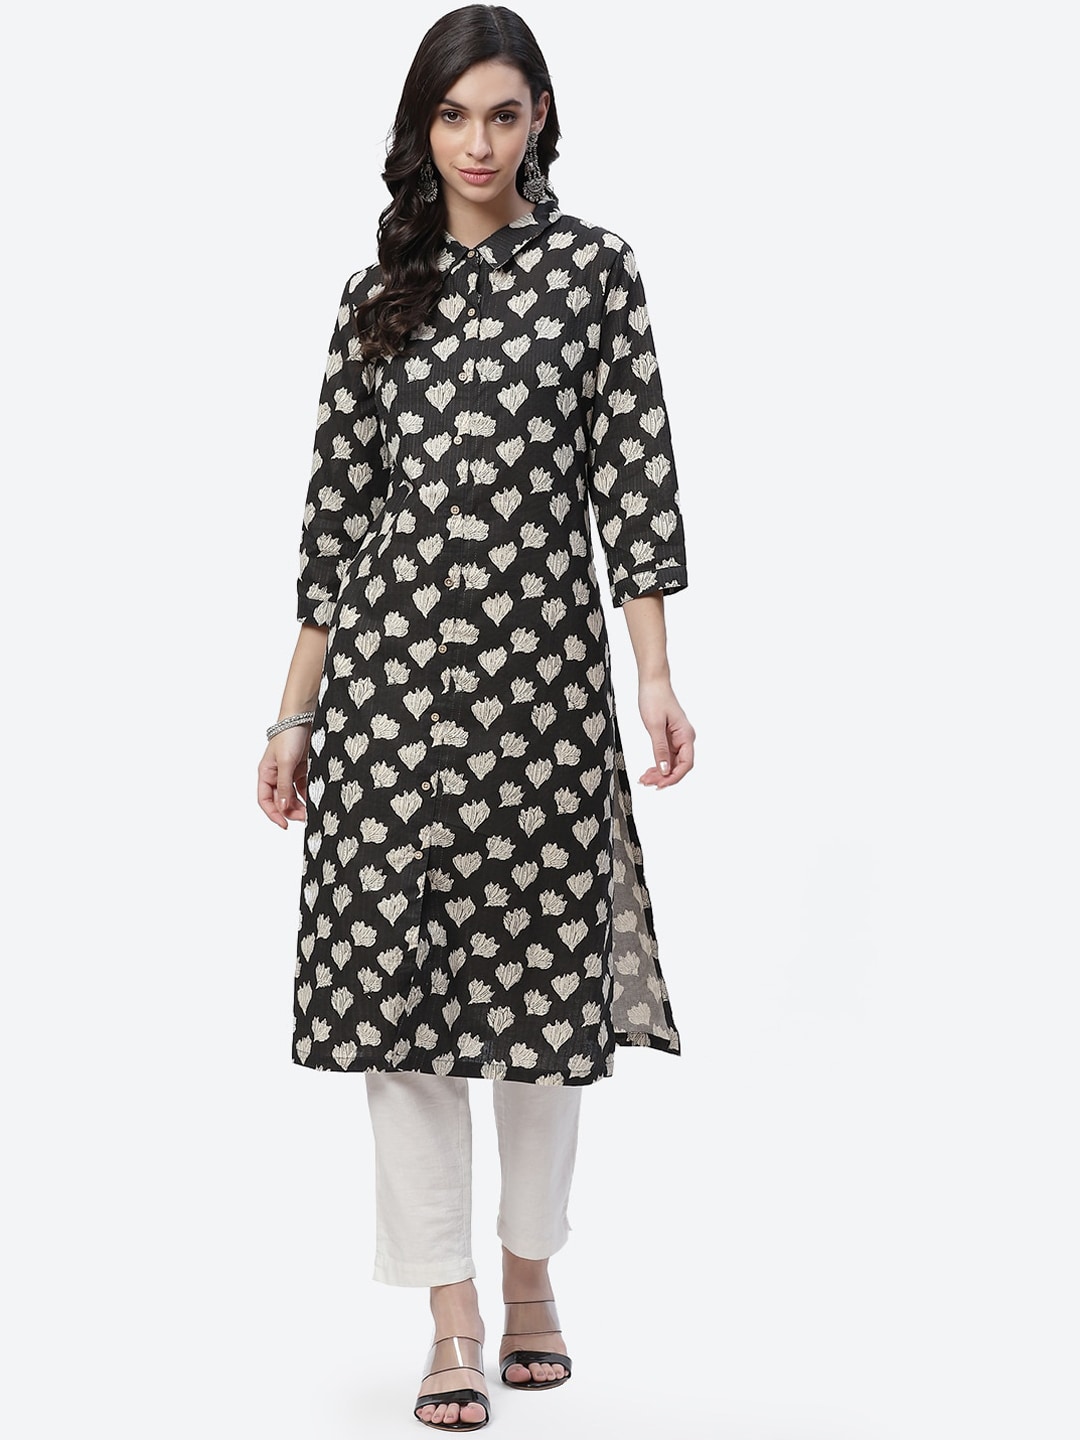 Biba Women Black and white ethnic motifs printed Kurta with cuffed sleeves Price in India